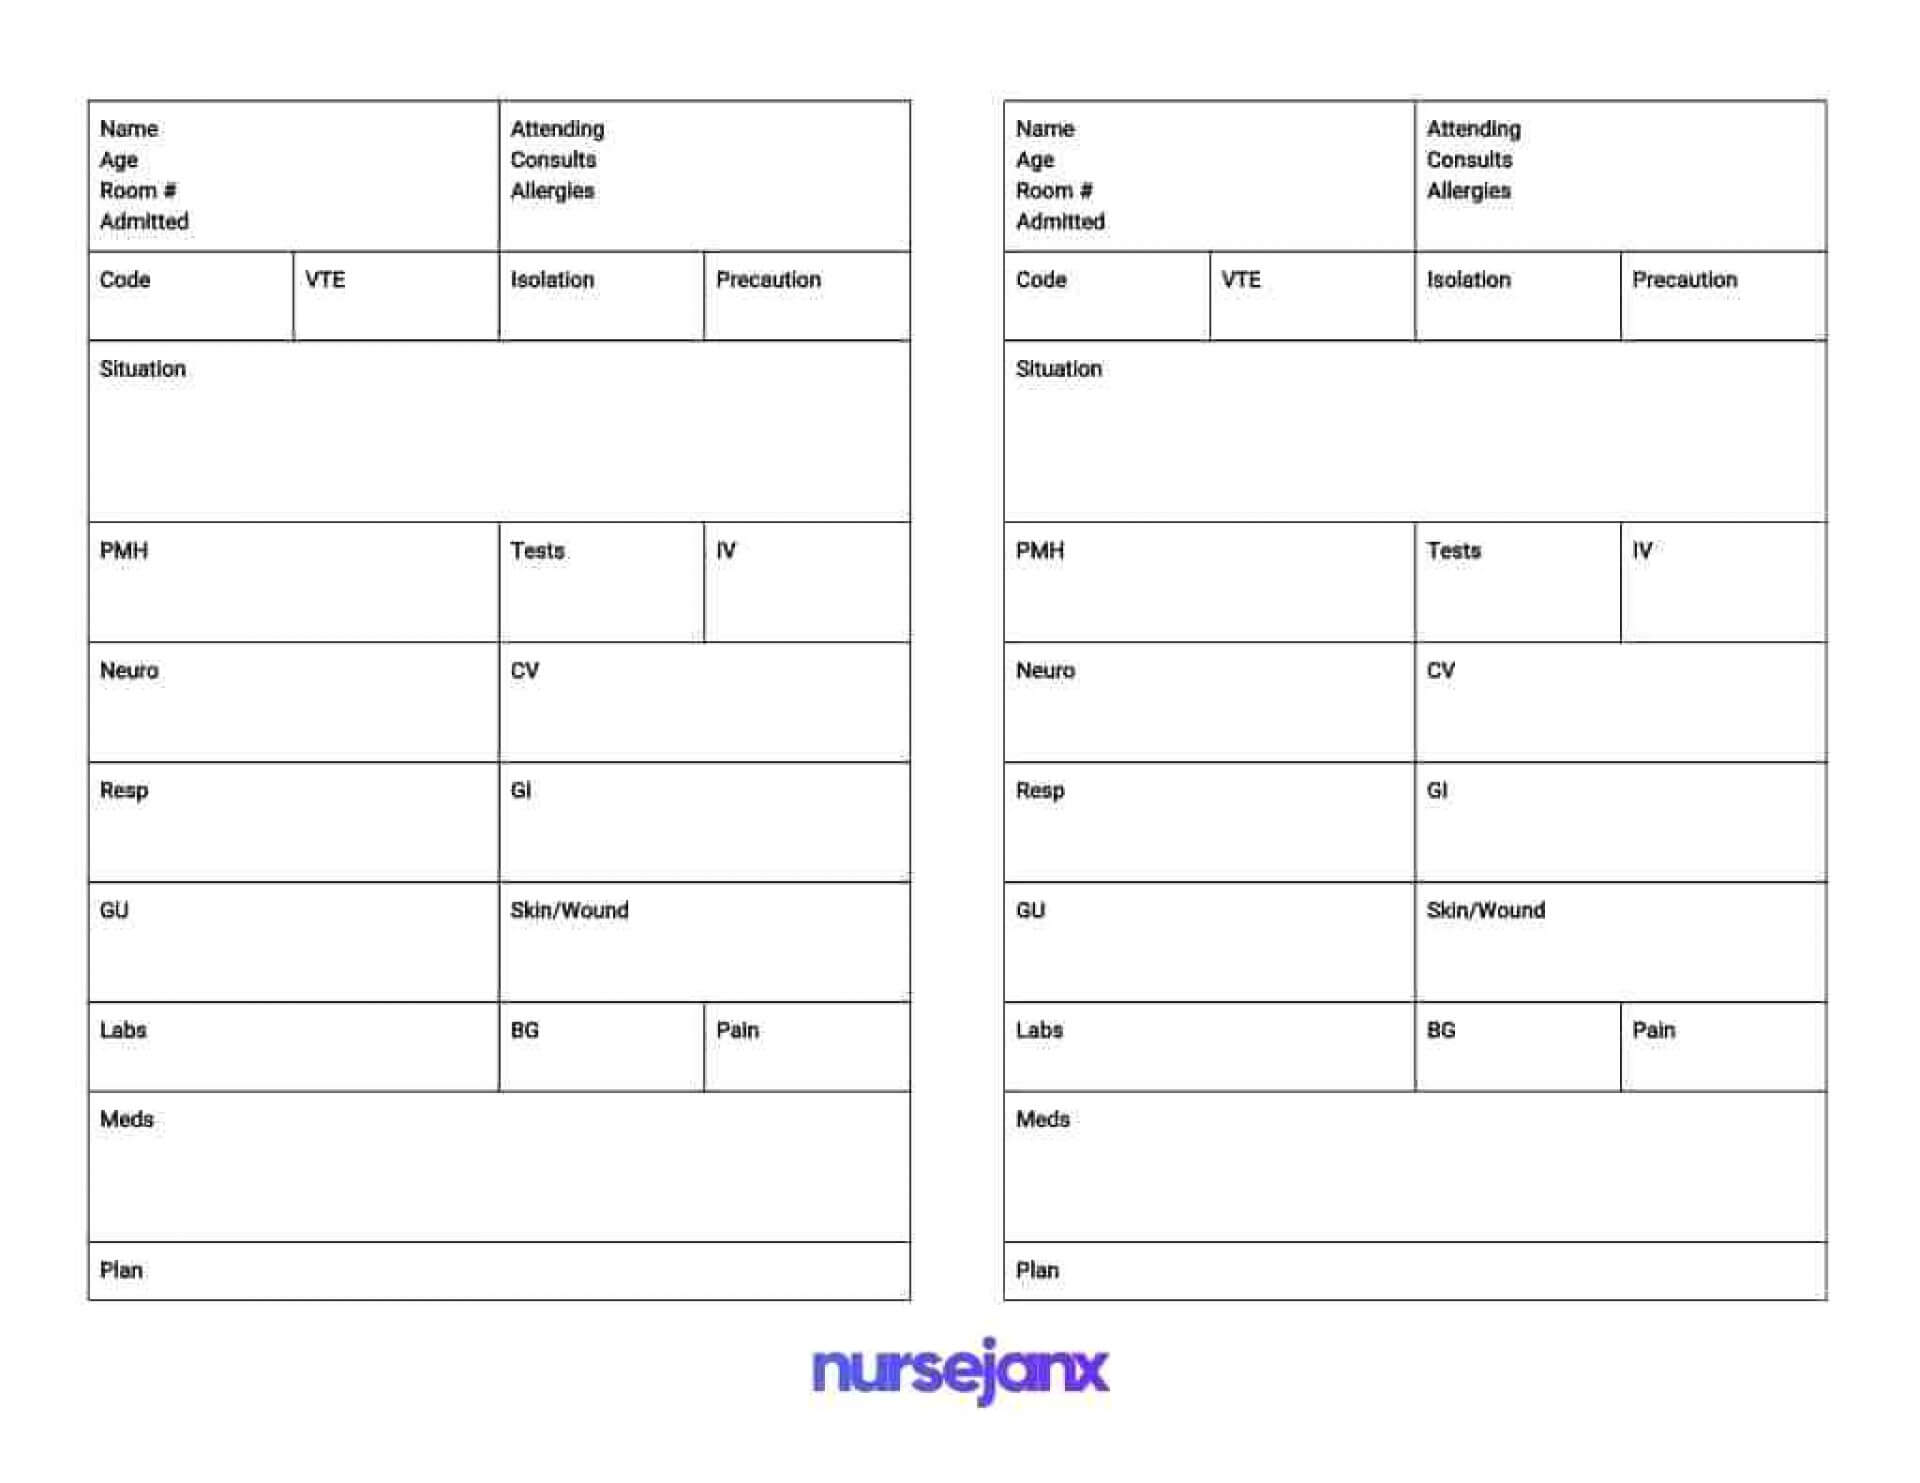 023 Table1 Nursing Shift Report Template Unforgettable Ideas In Shift Report Template